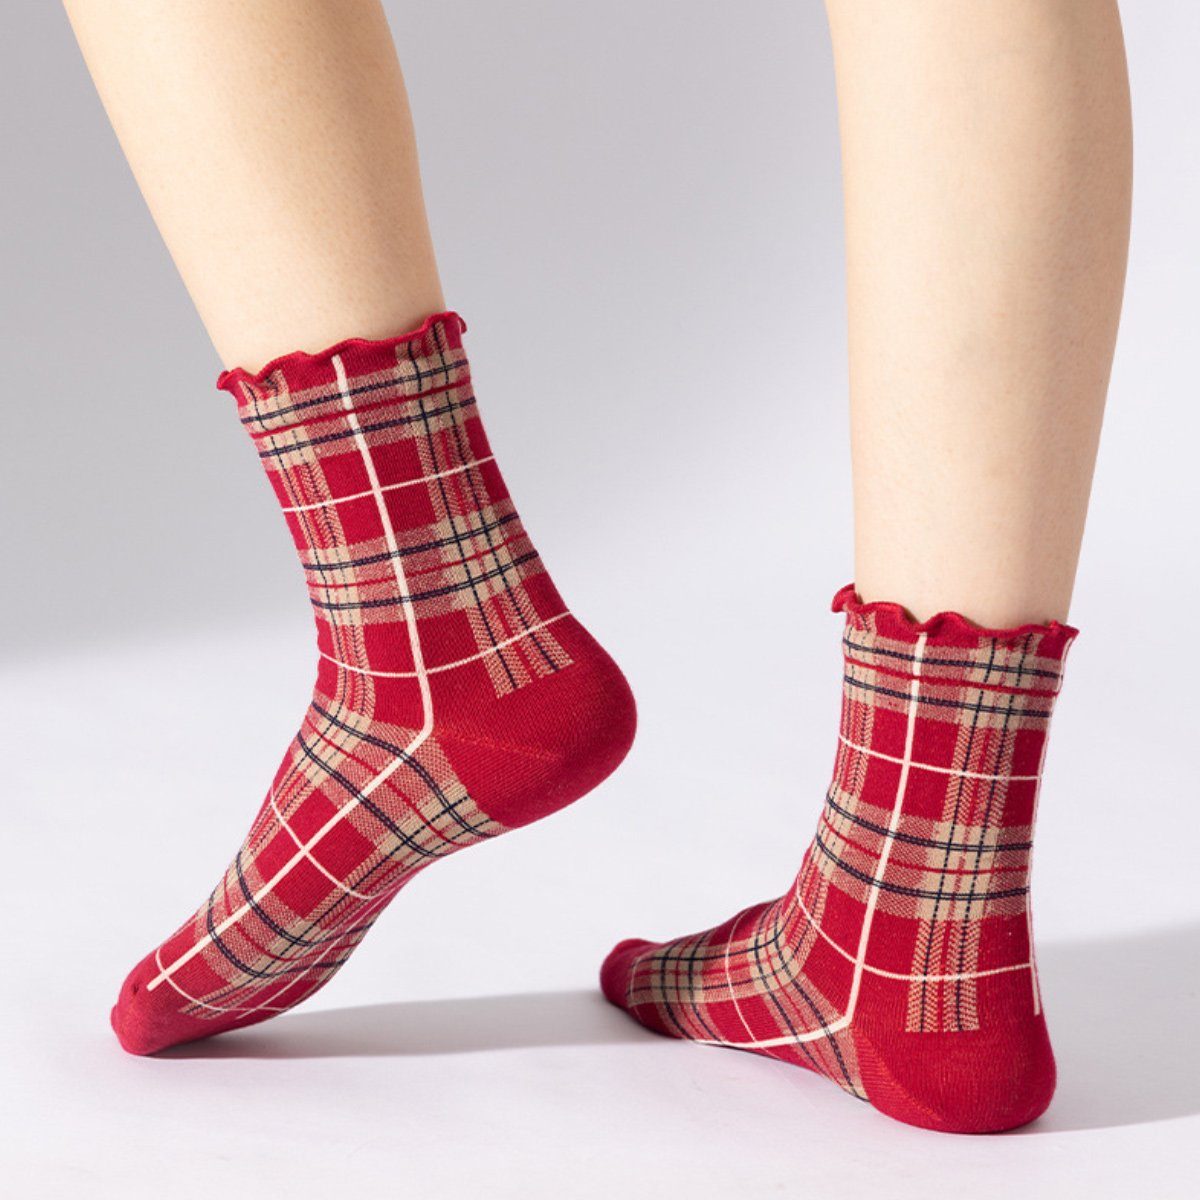 Socken,Atmungsaktive Damen Baumwolle Jormftte Socken Sneaker Crew Freizeitsocken Komfort Rot